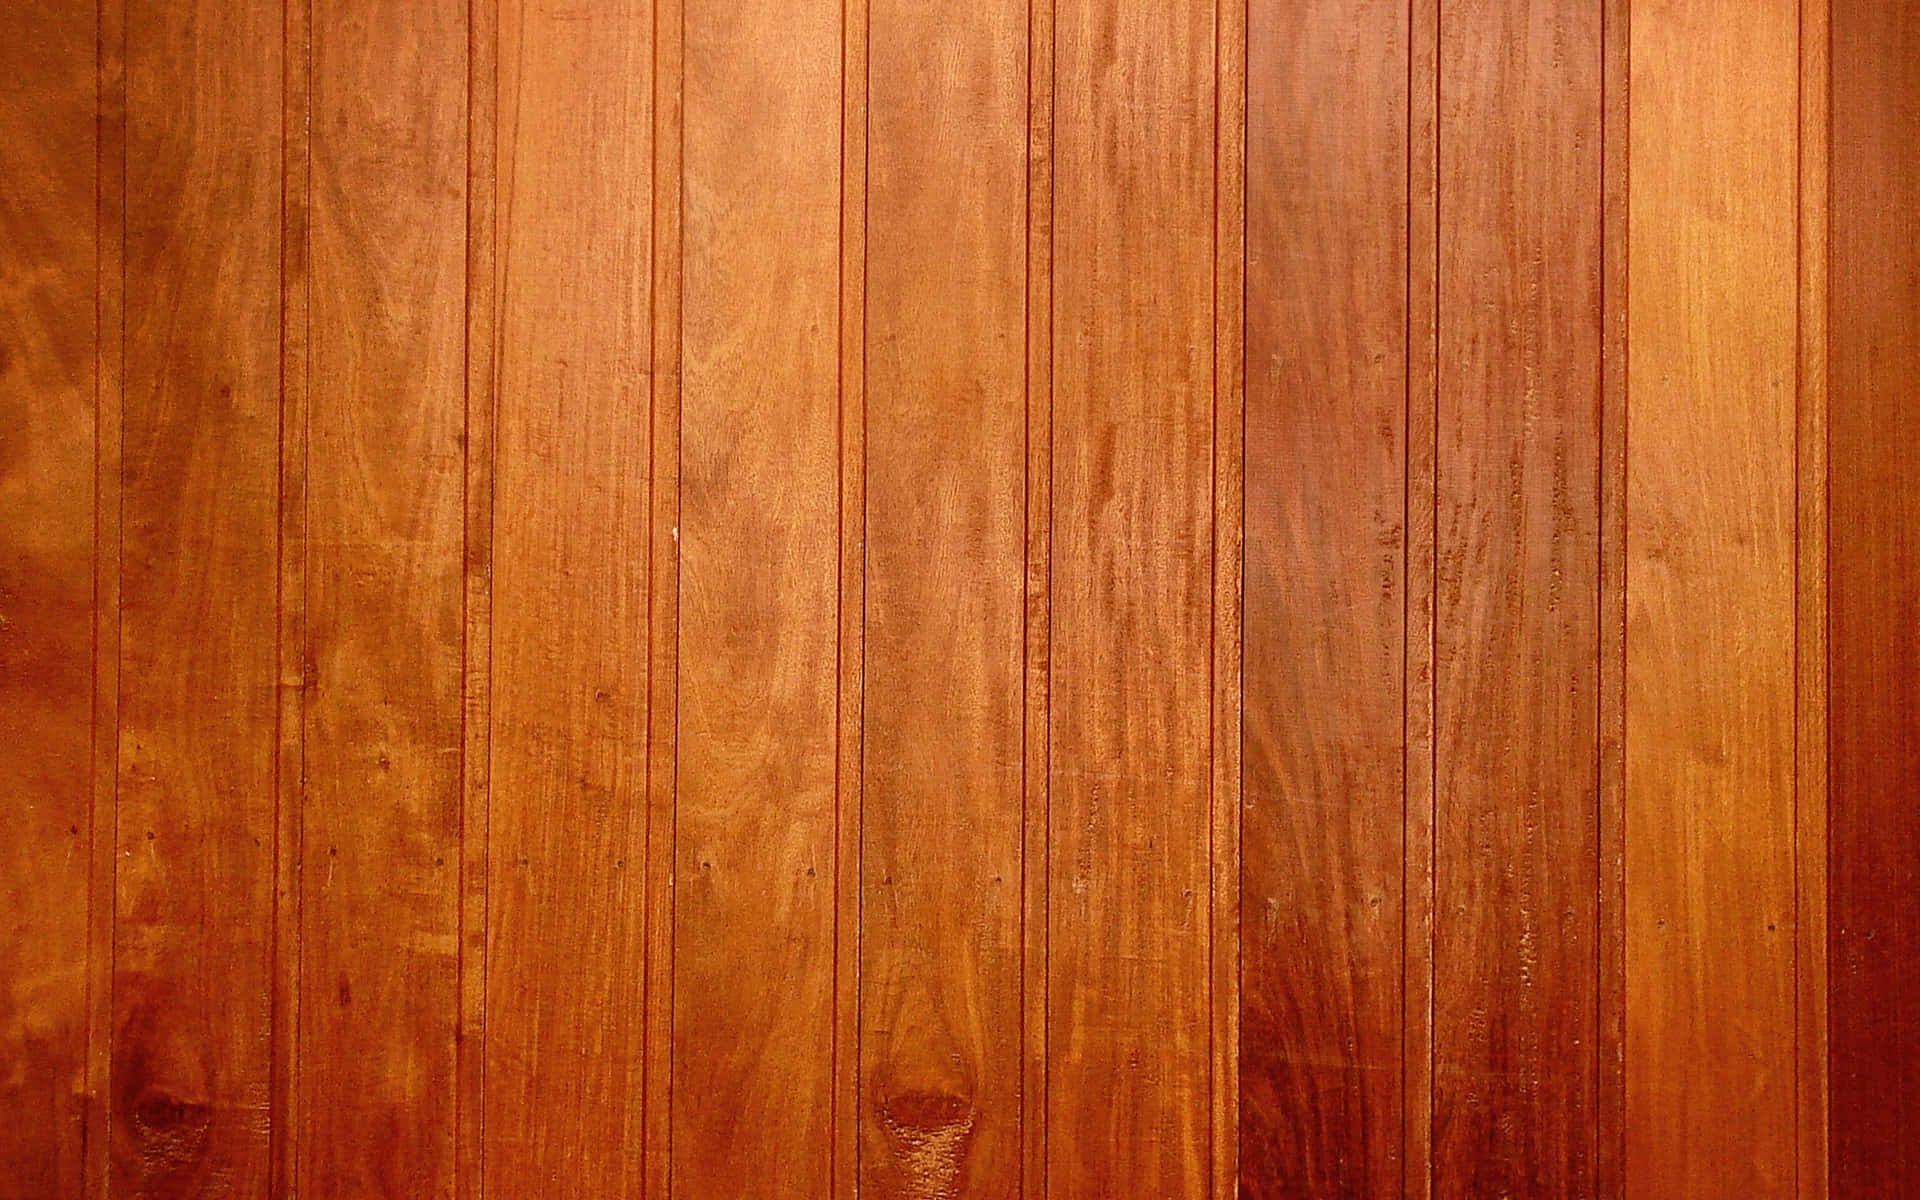 Caption: Elegant Wooden Flooring Background